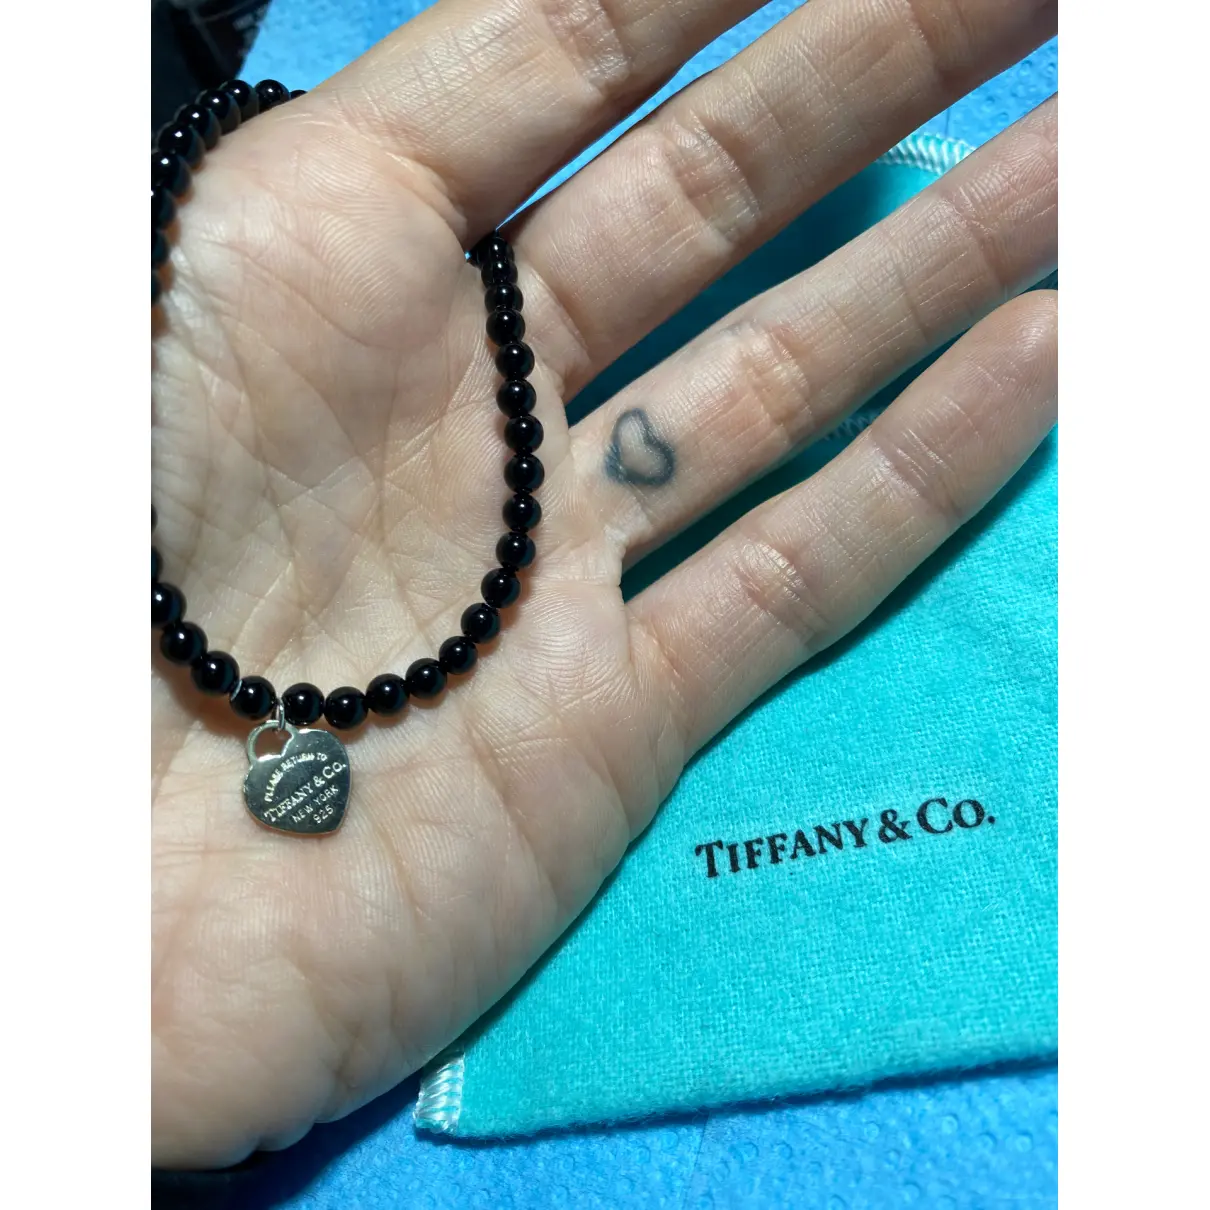 Return to Tiffany silver bracelet Tiffany & Co